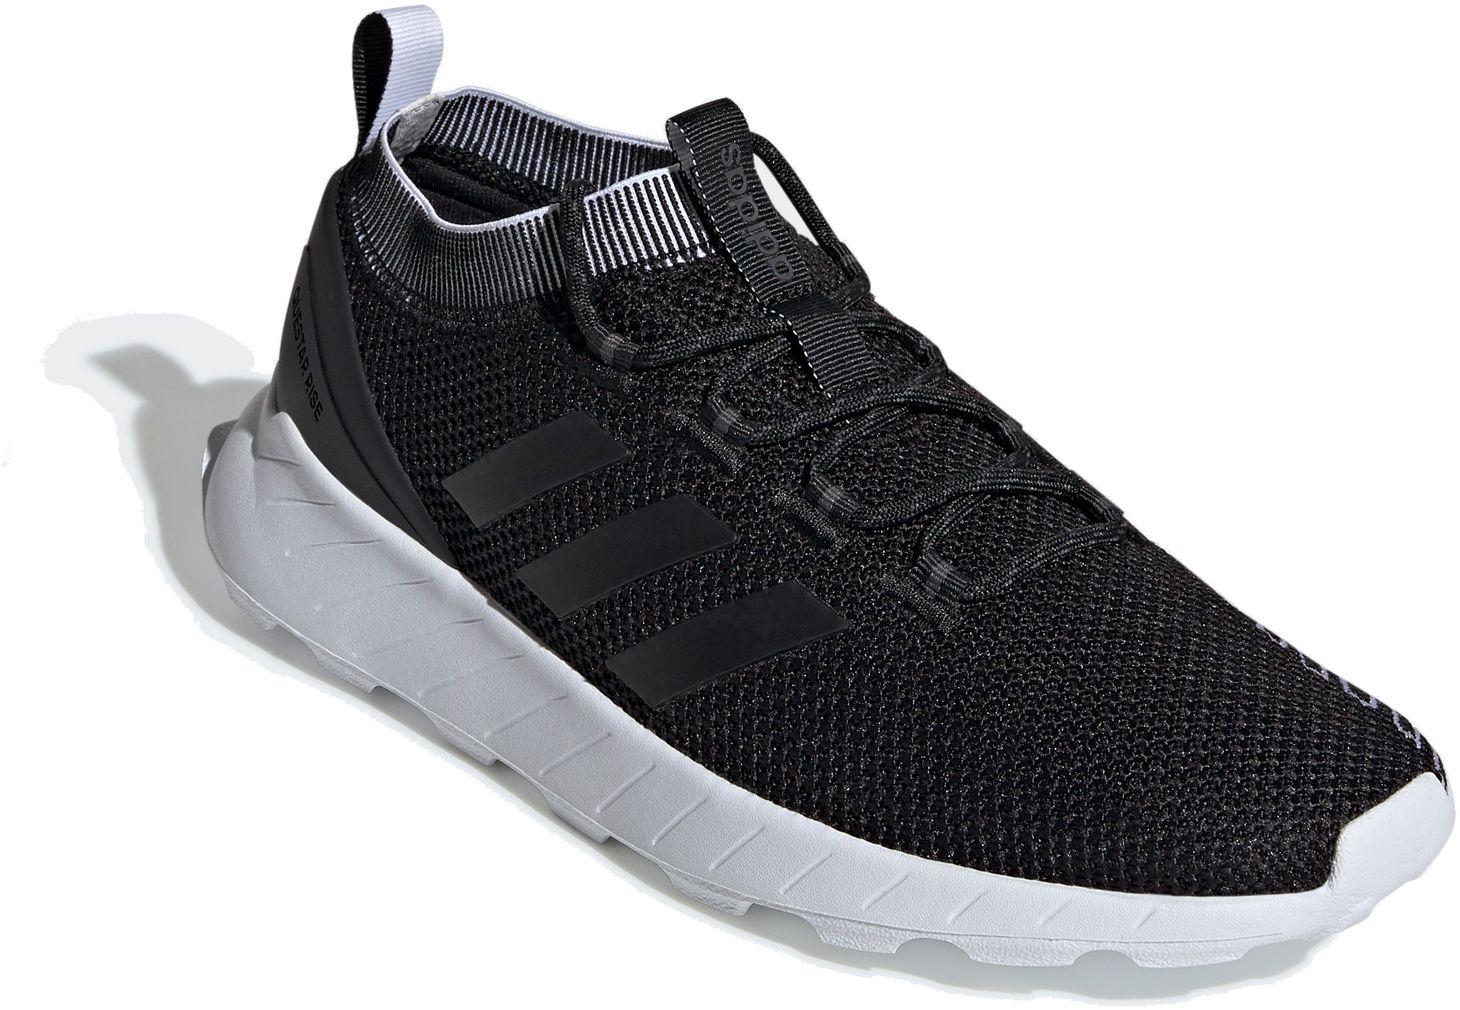 adidas Questar Rise Shoes in Black/Black/White (Black) for Men - Lyst